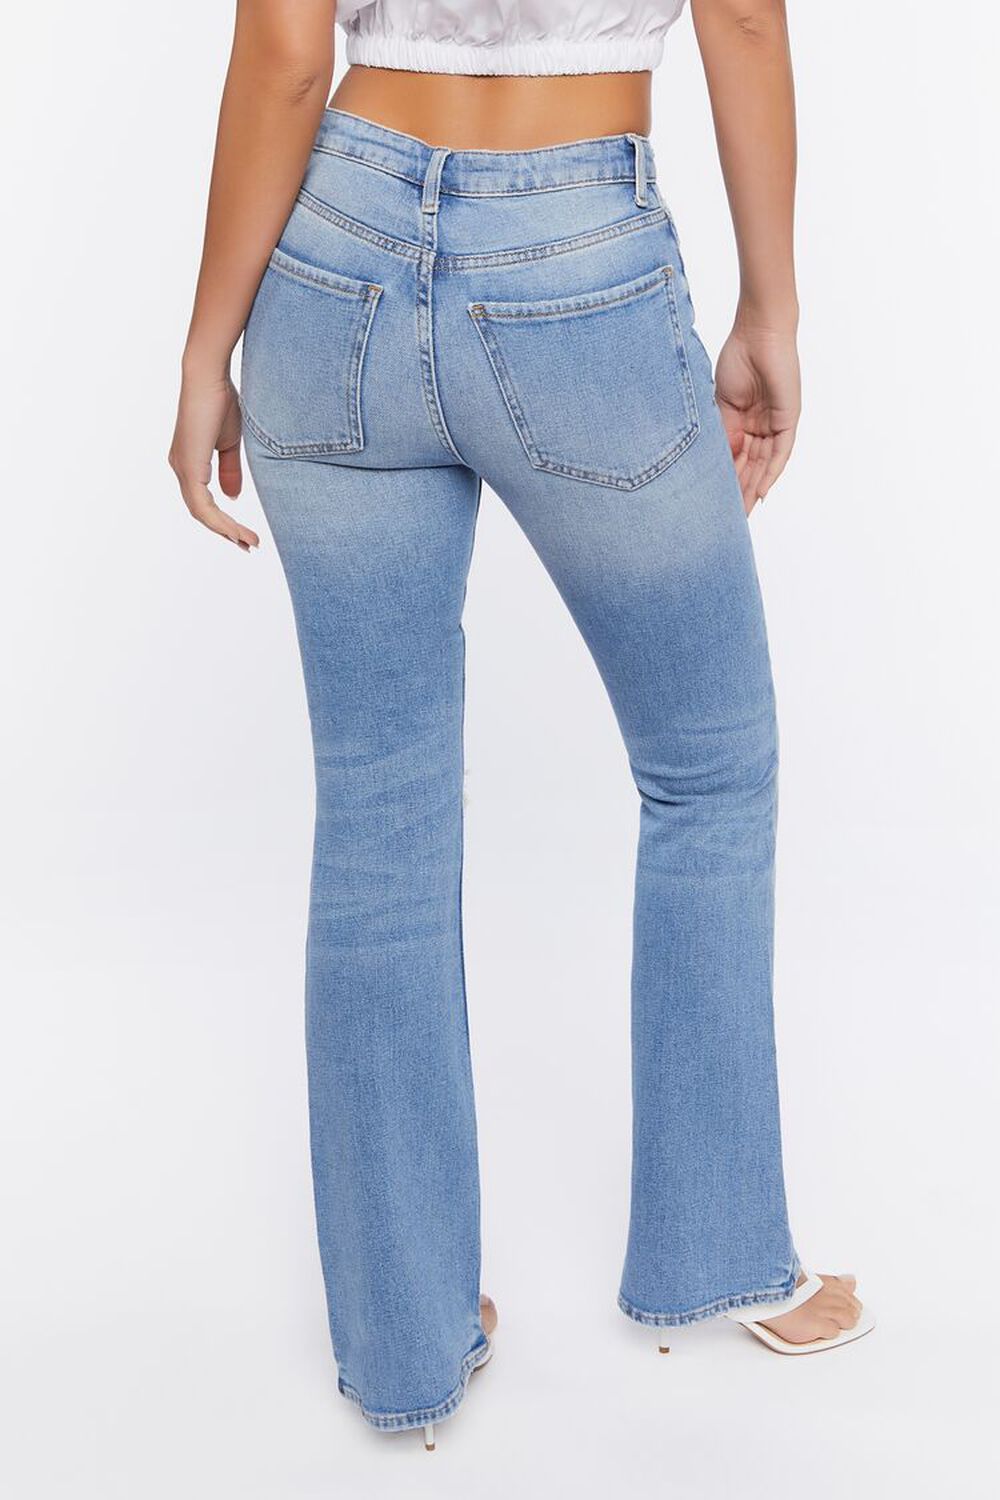 Hemp 10% Distressed Flare Jeans